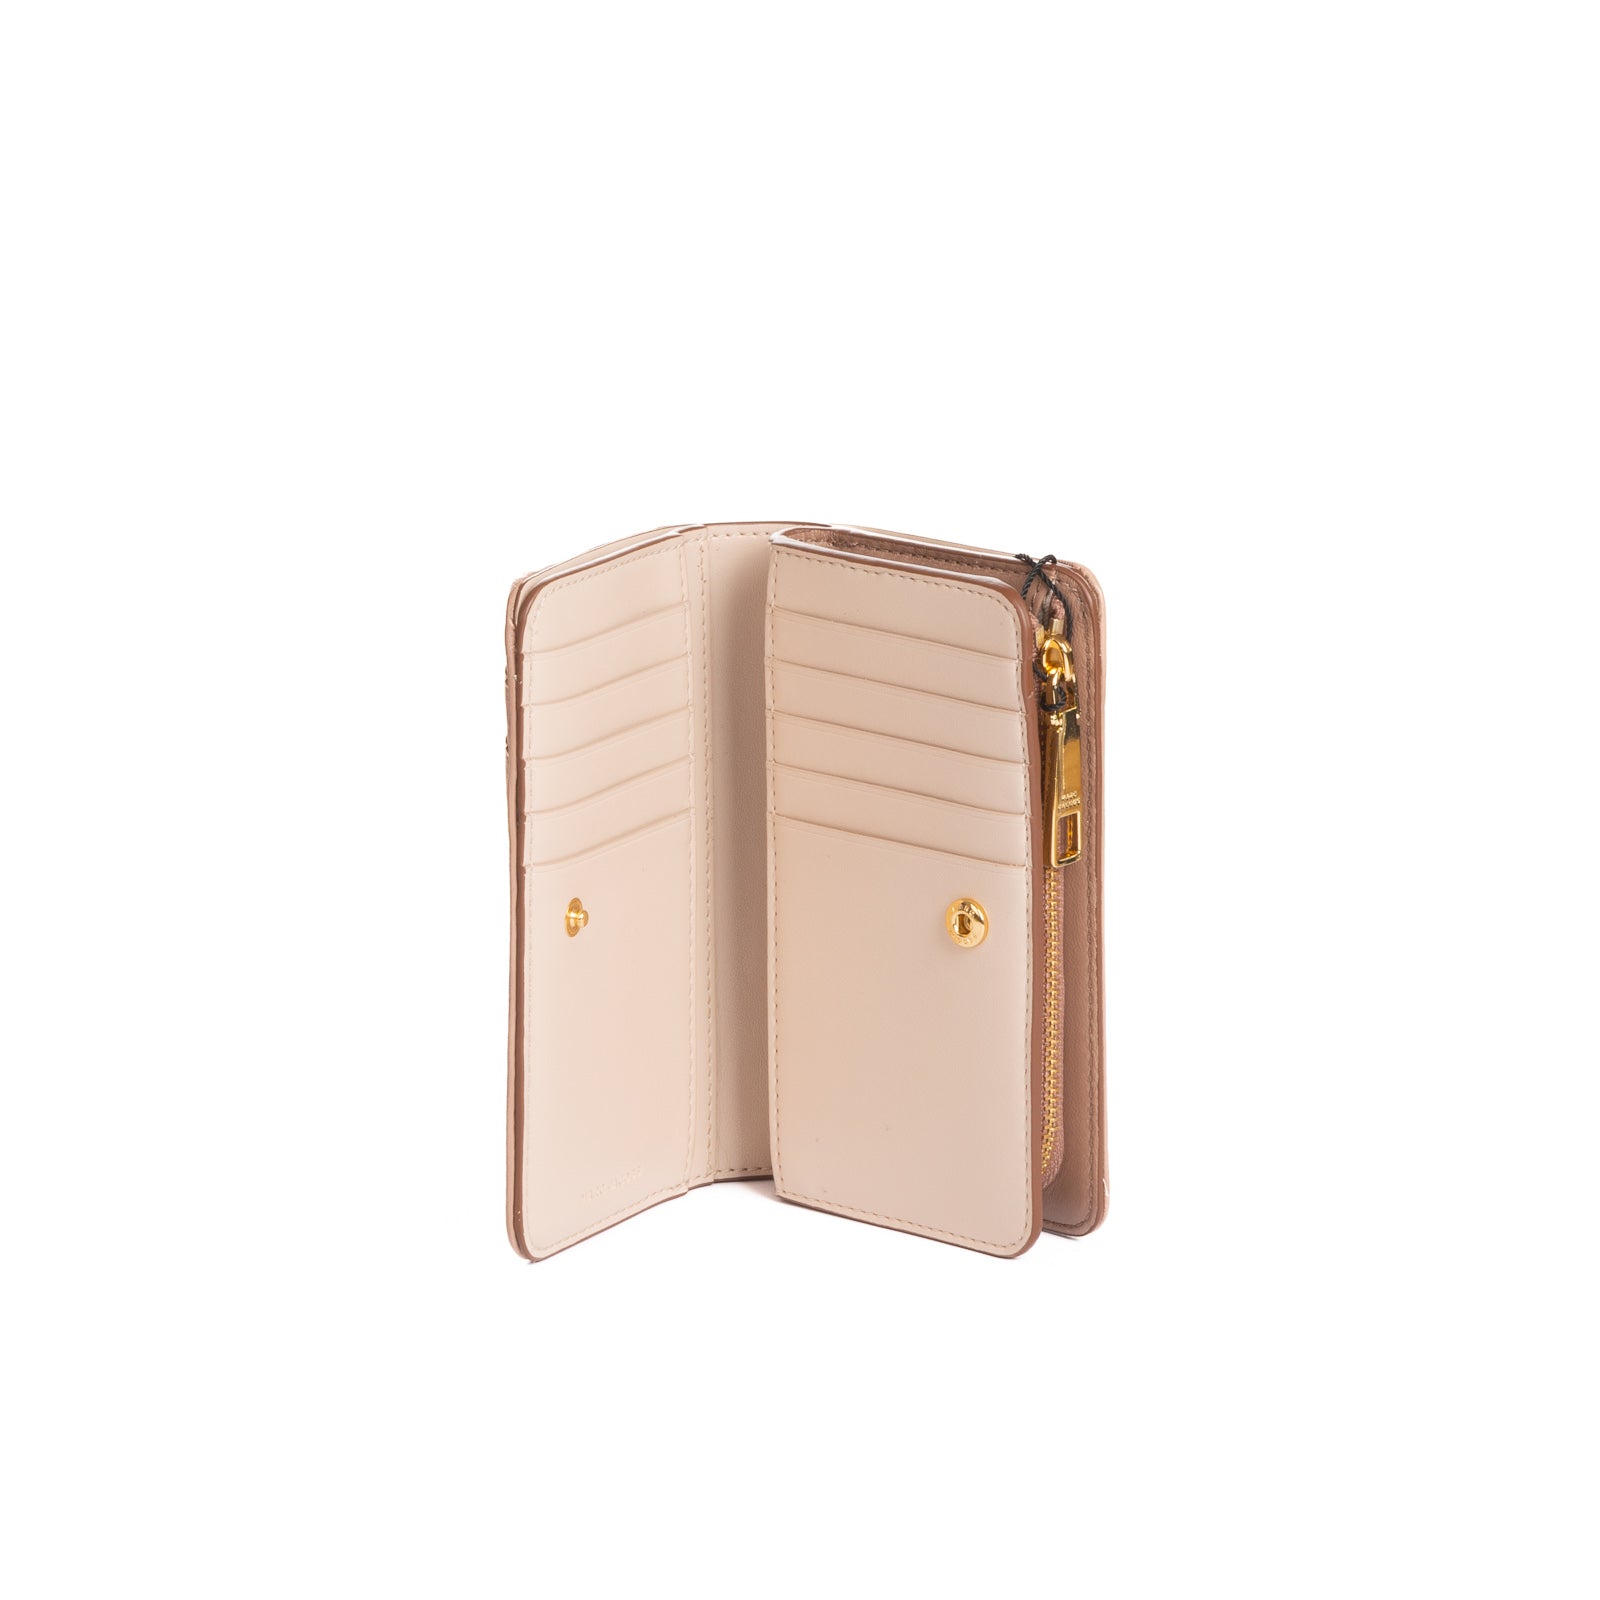 Portafogli MARC JACOBS Compact wallet
Dusty beige